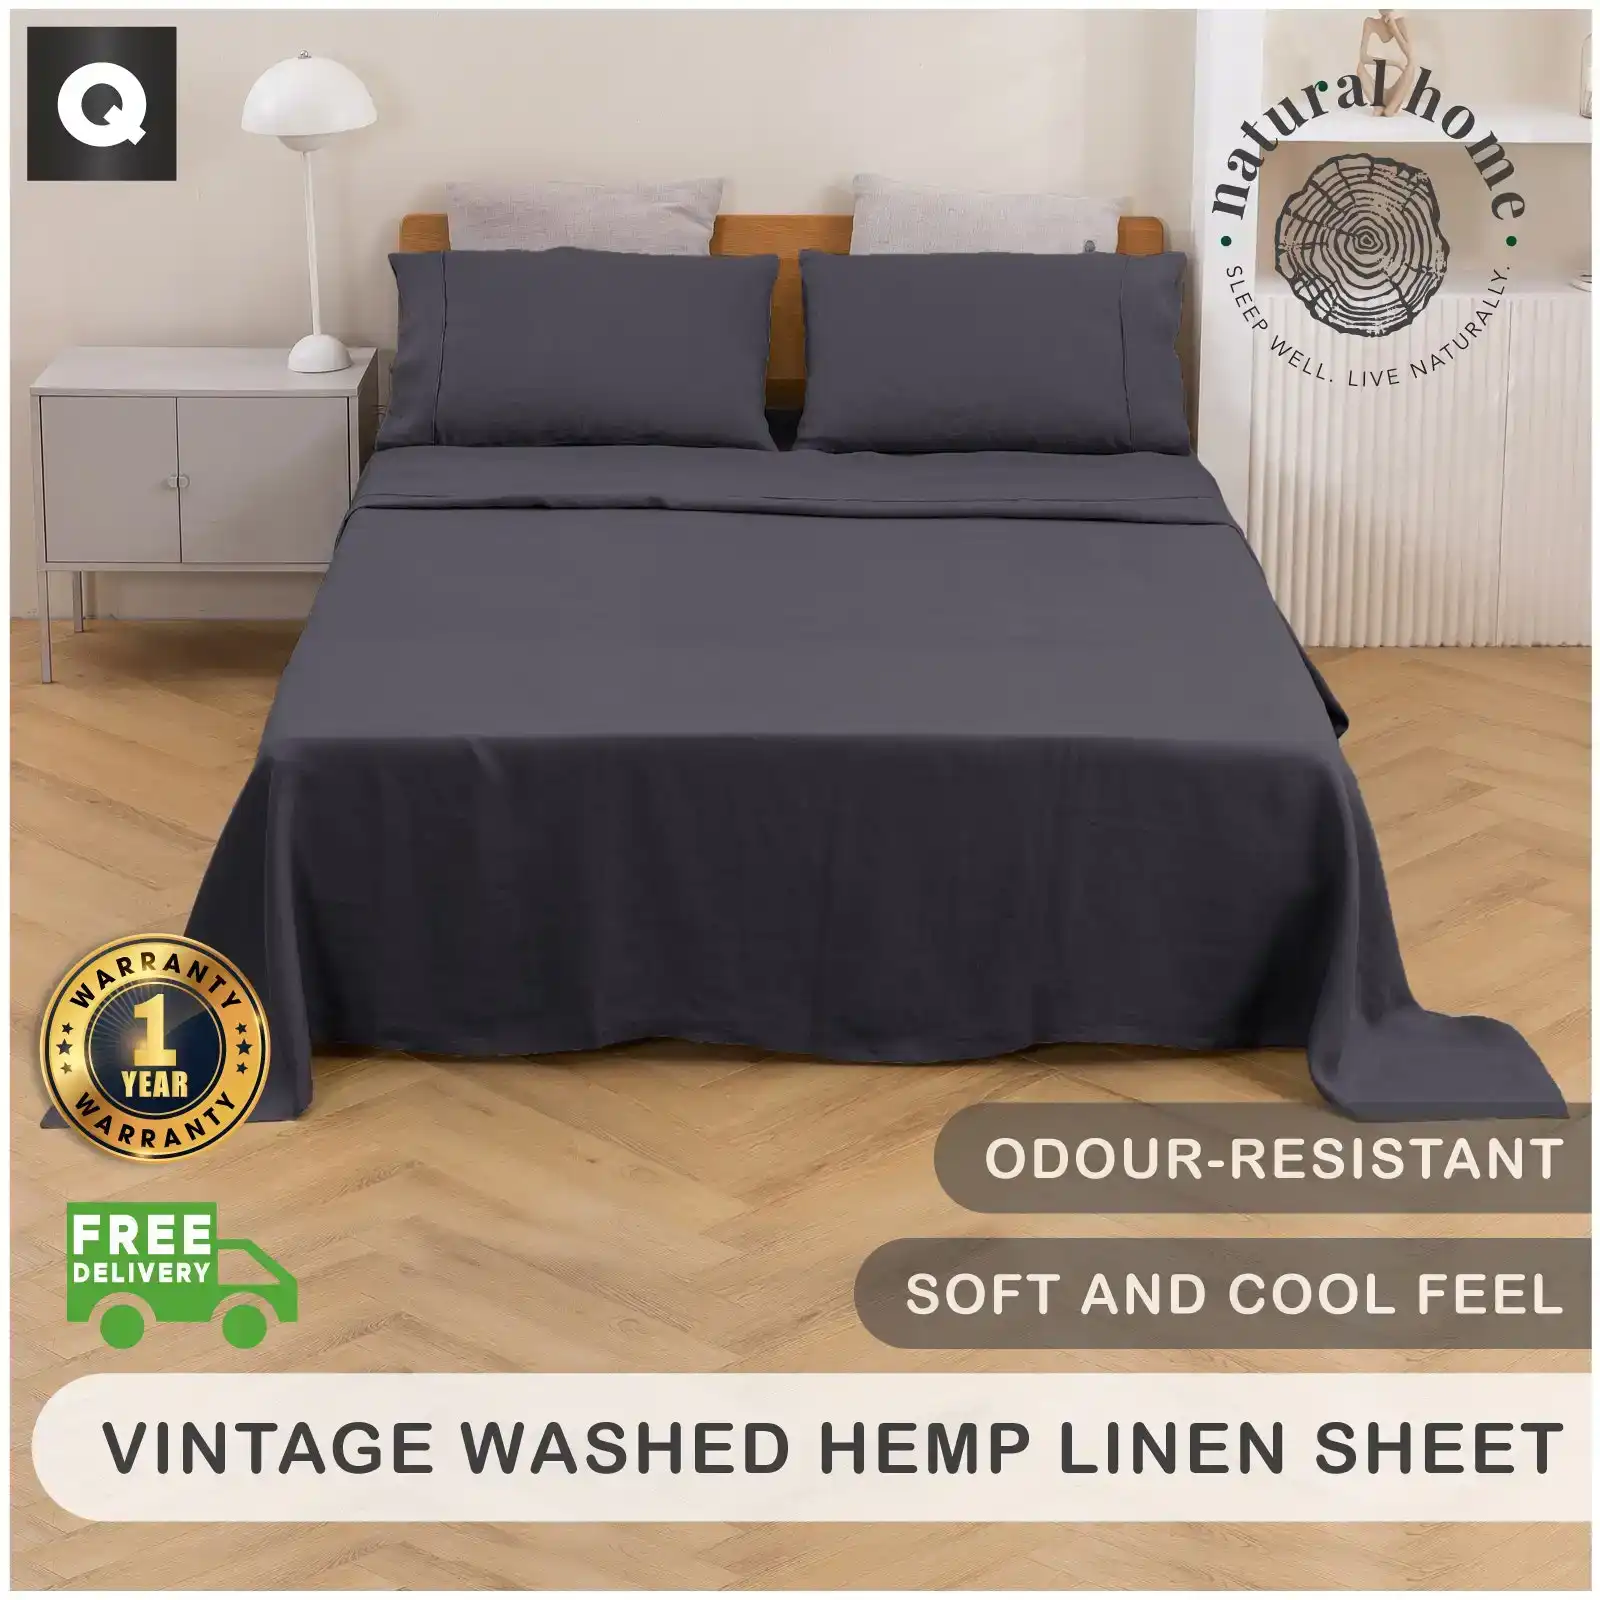 Natural Home Vintage Washed Hemp Linen Sheet Set Charcoal Queen Bed